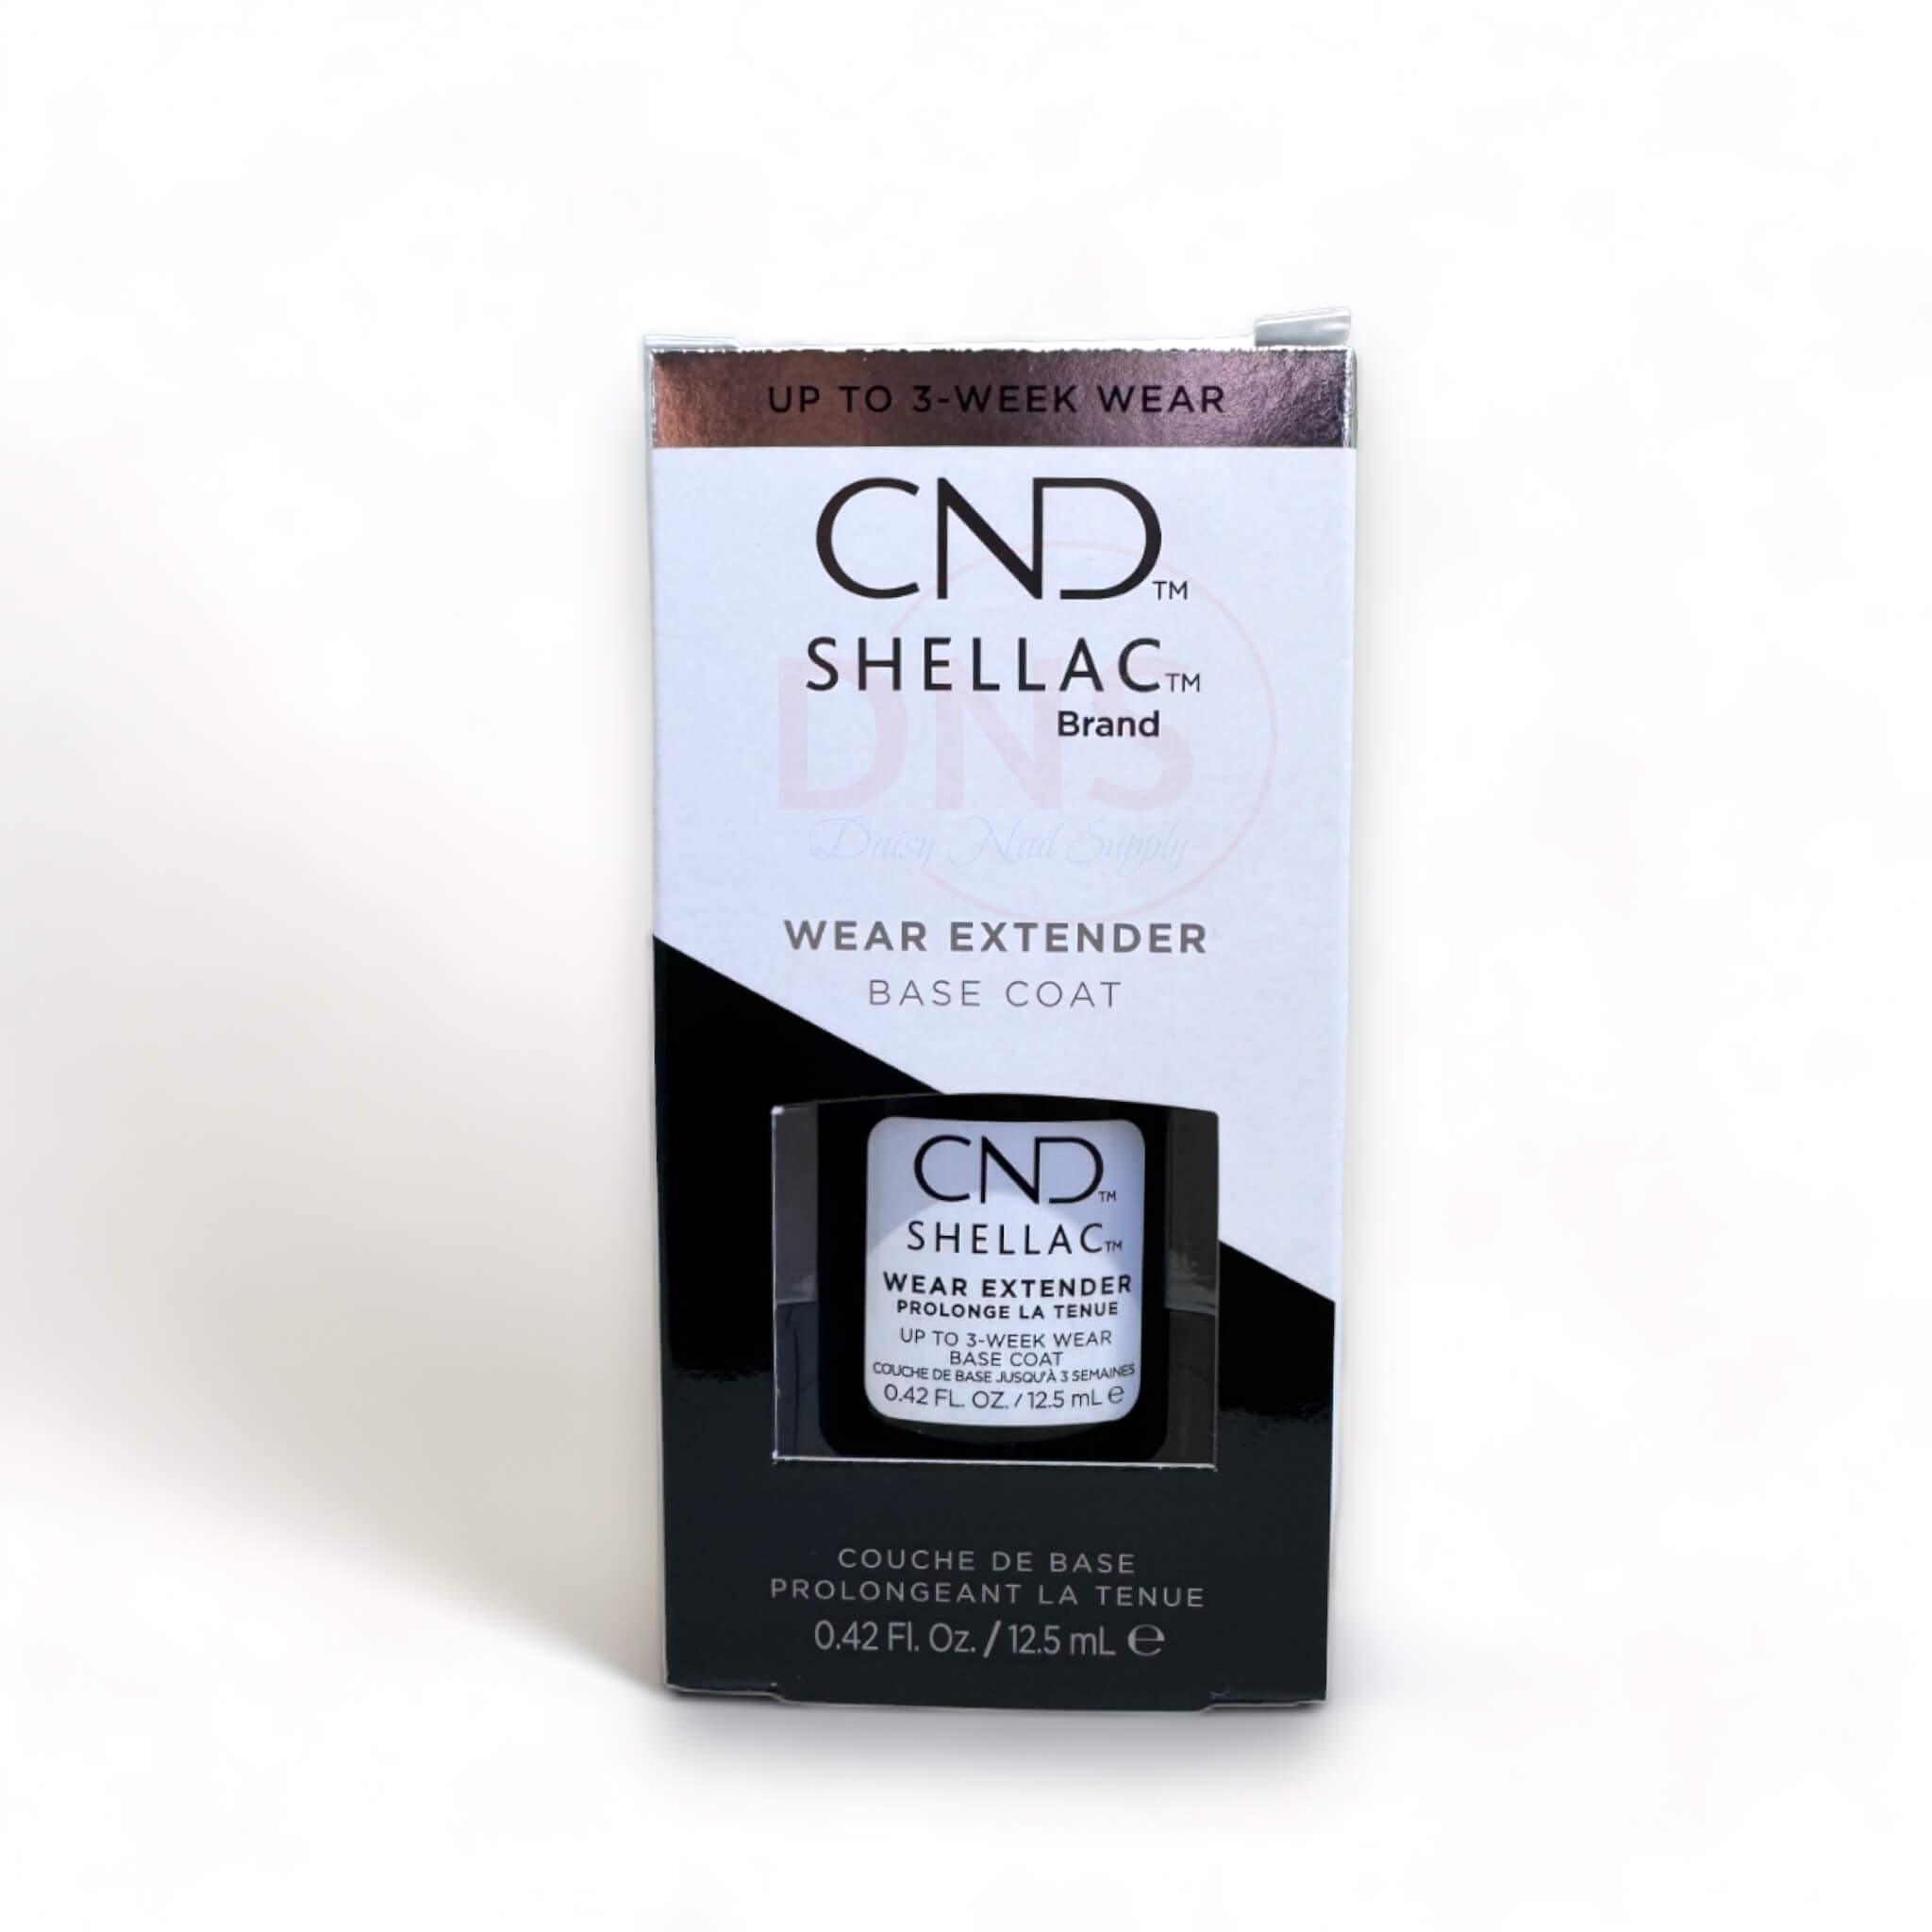 CND™ SHELLAC™ WEAR EXTENDER BASE COAT 0.42 Fl oz